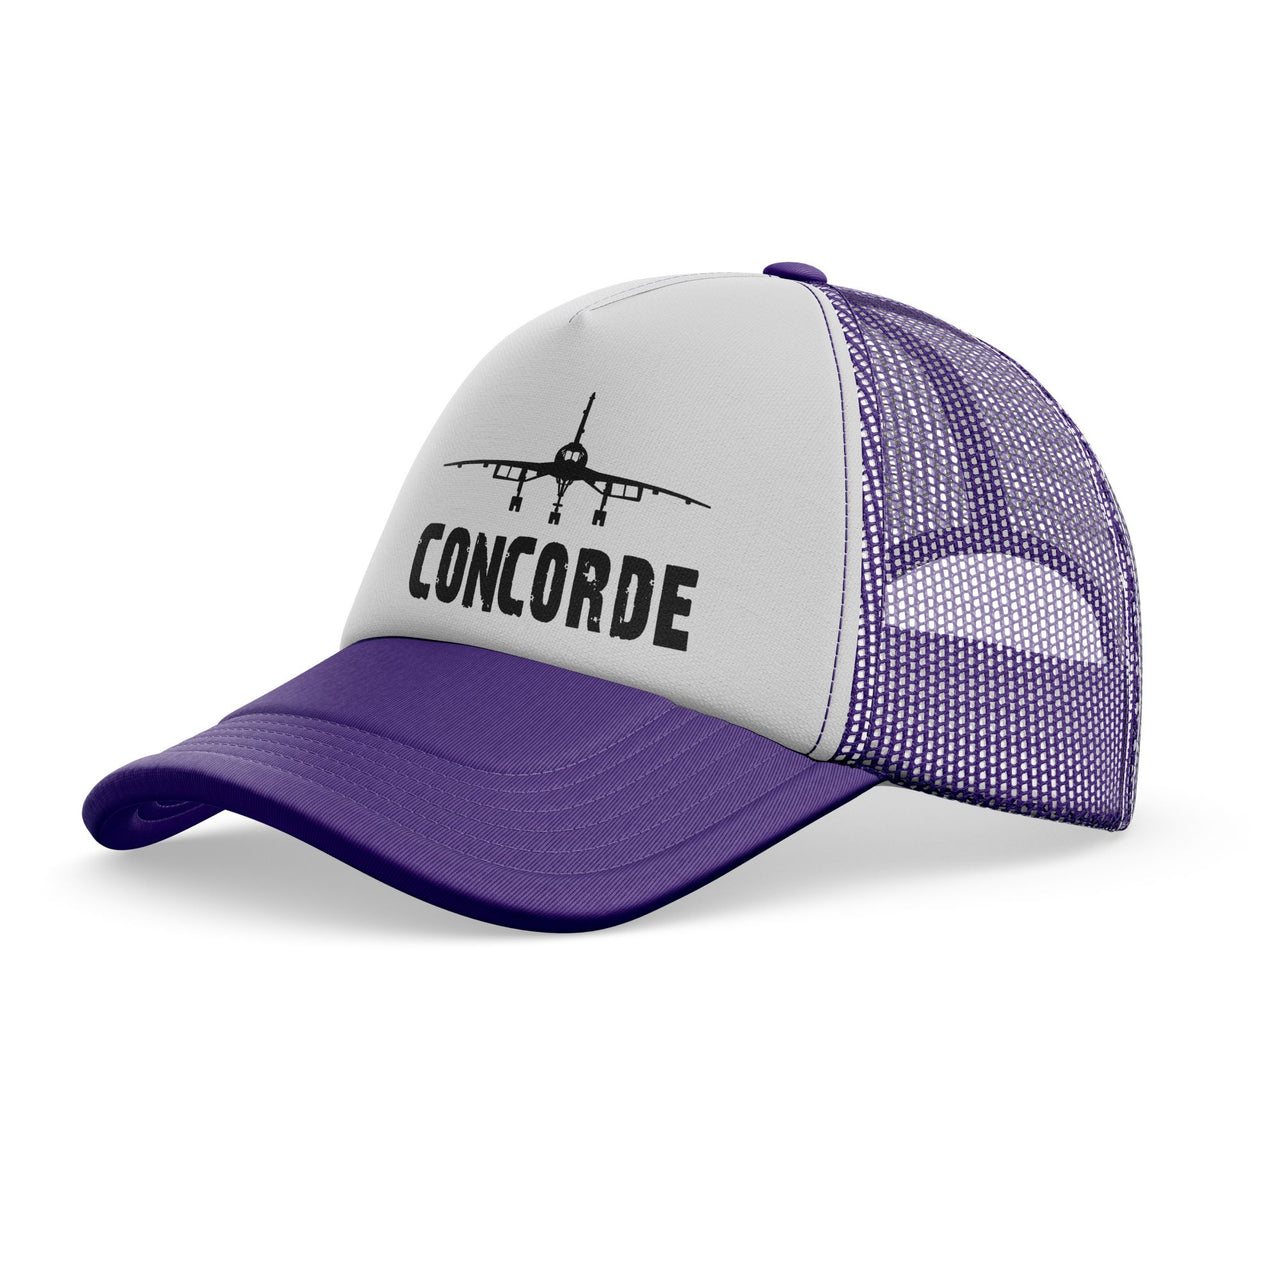 Concorde & Plane Designed Trucker Caps & Hats